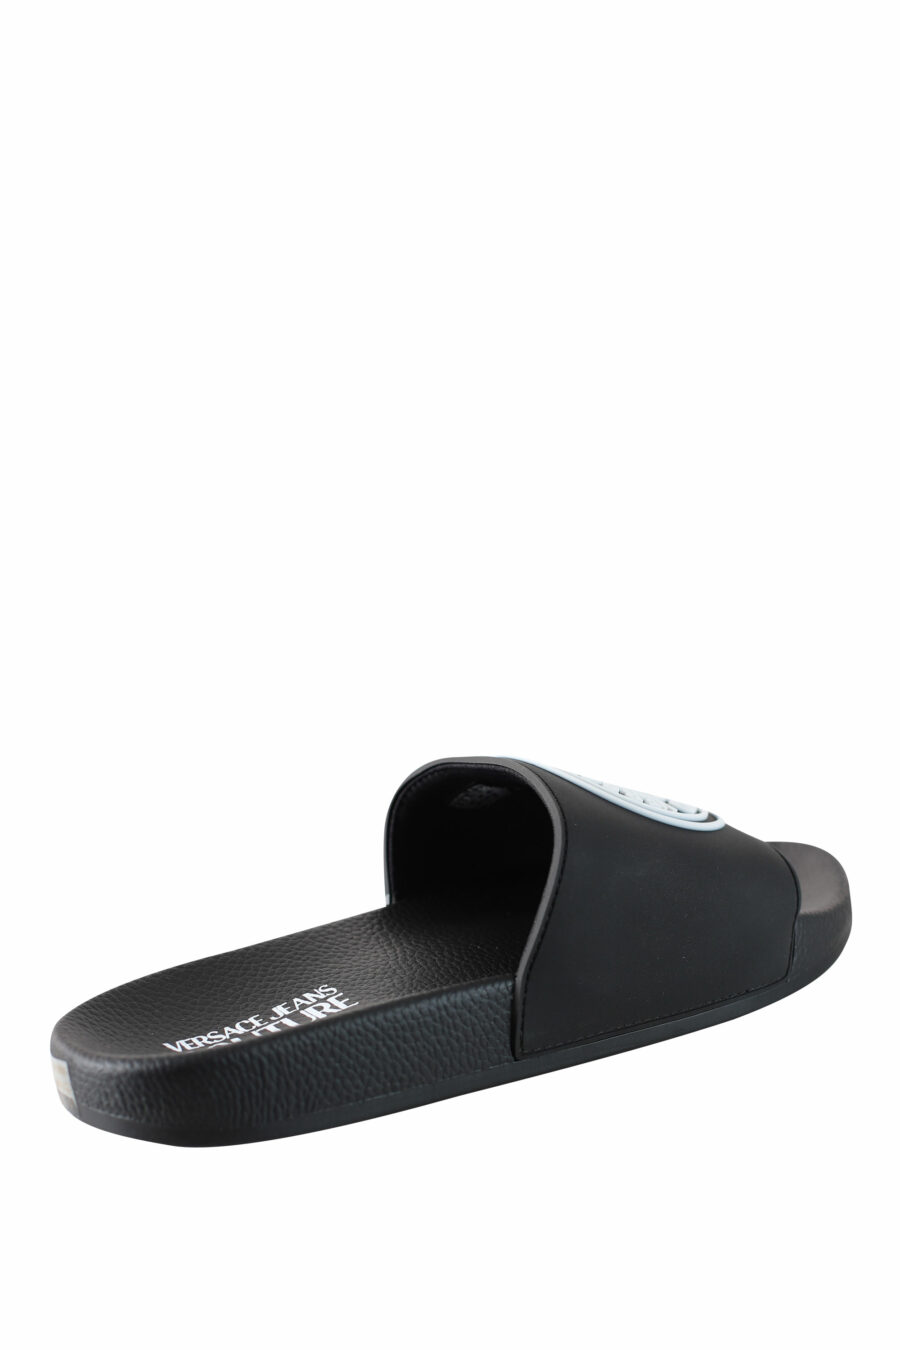 Black flip flops with black circular maxilogo - IMG 4427